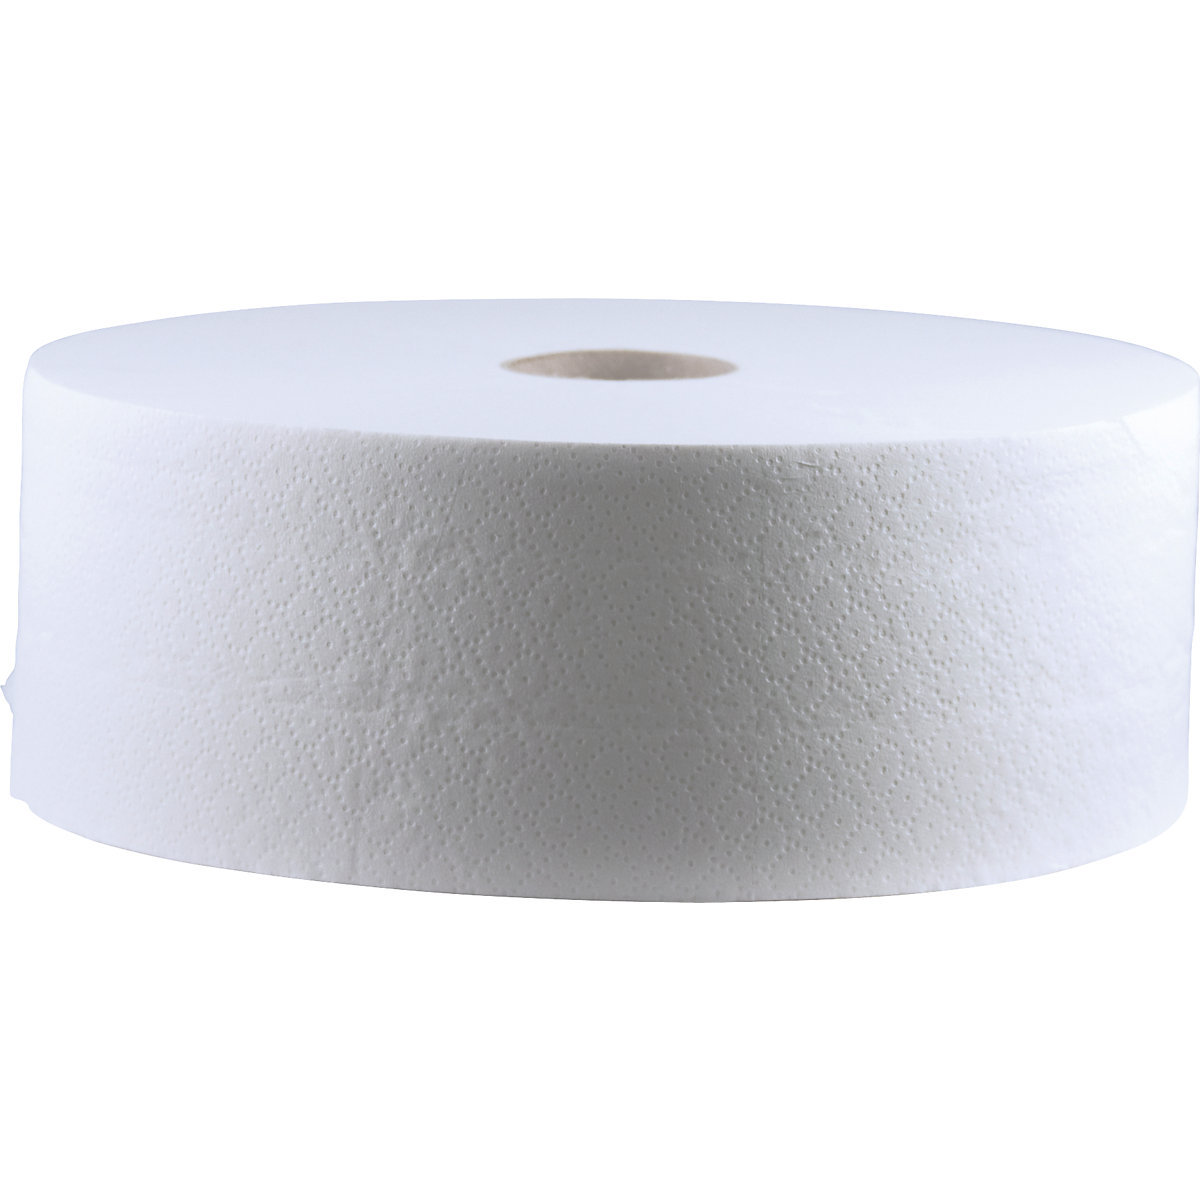 Velike role toaletnega papirja Tissue – CWS